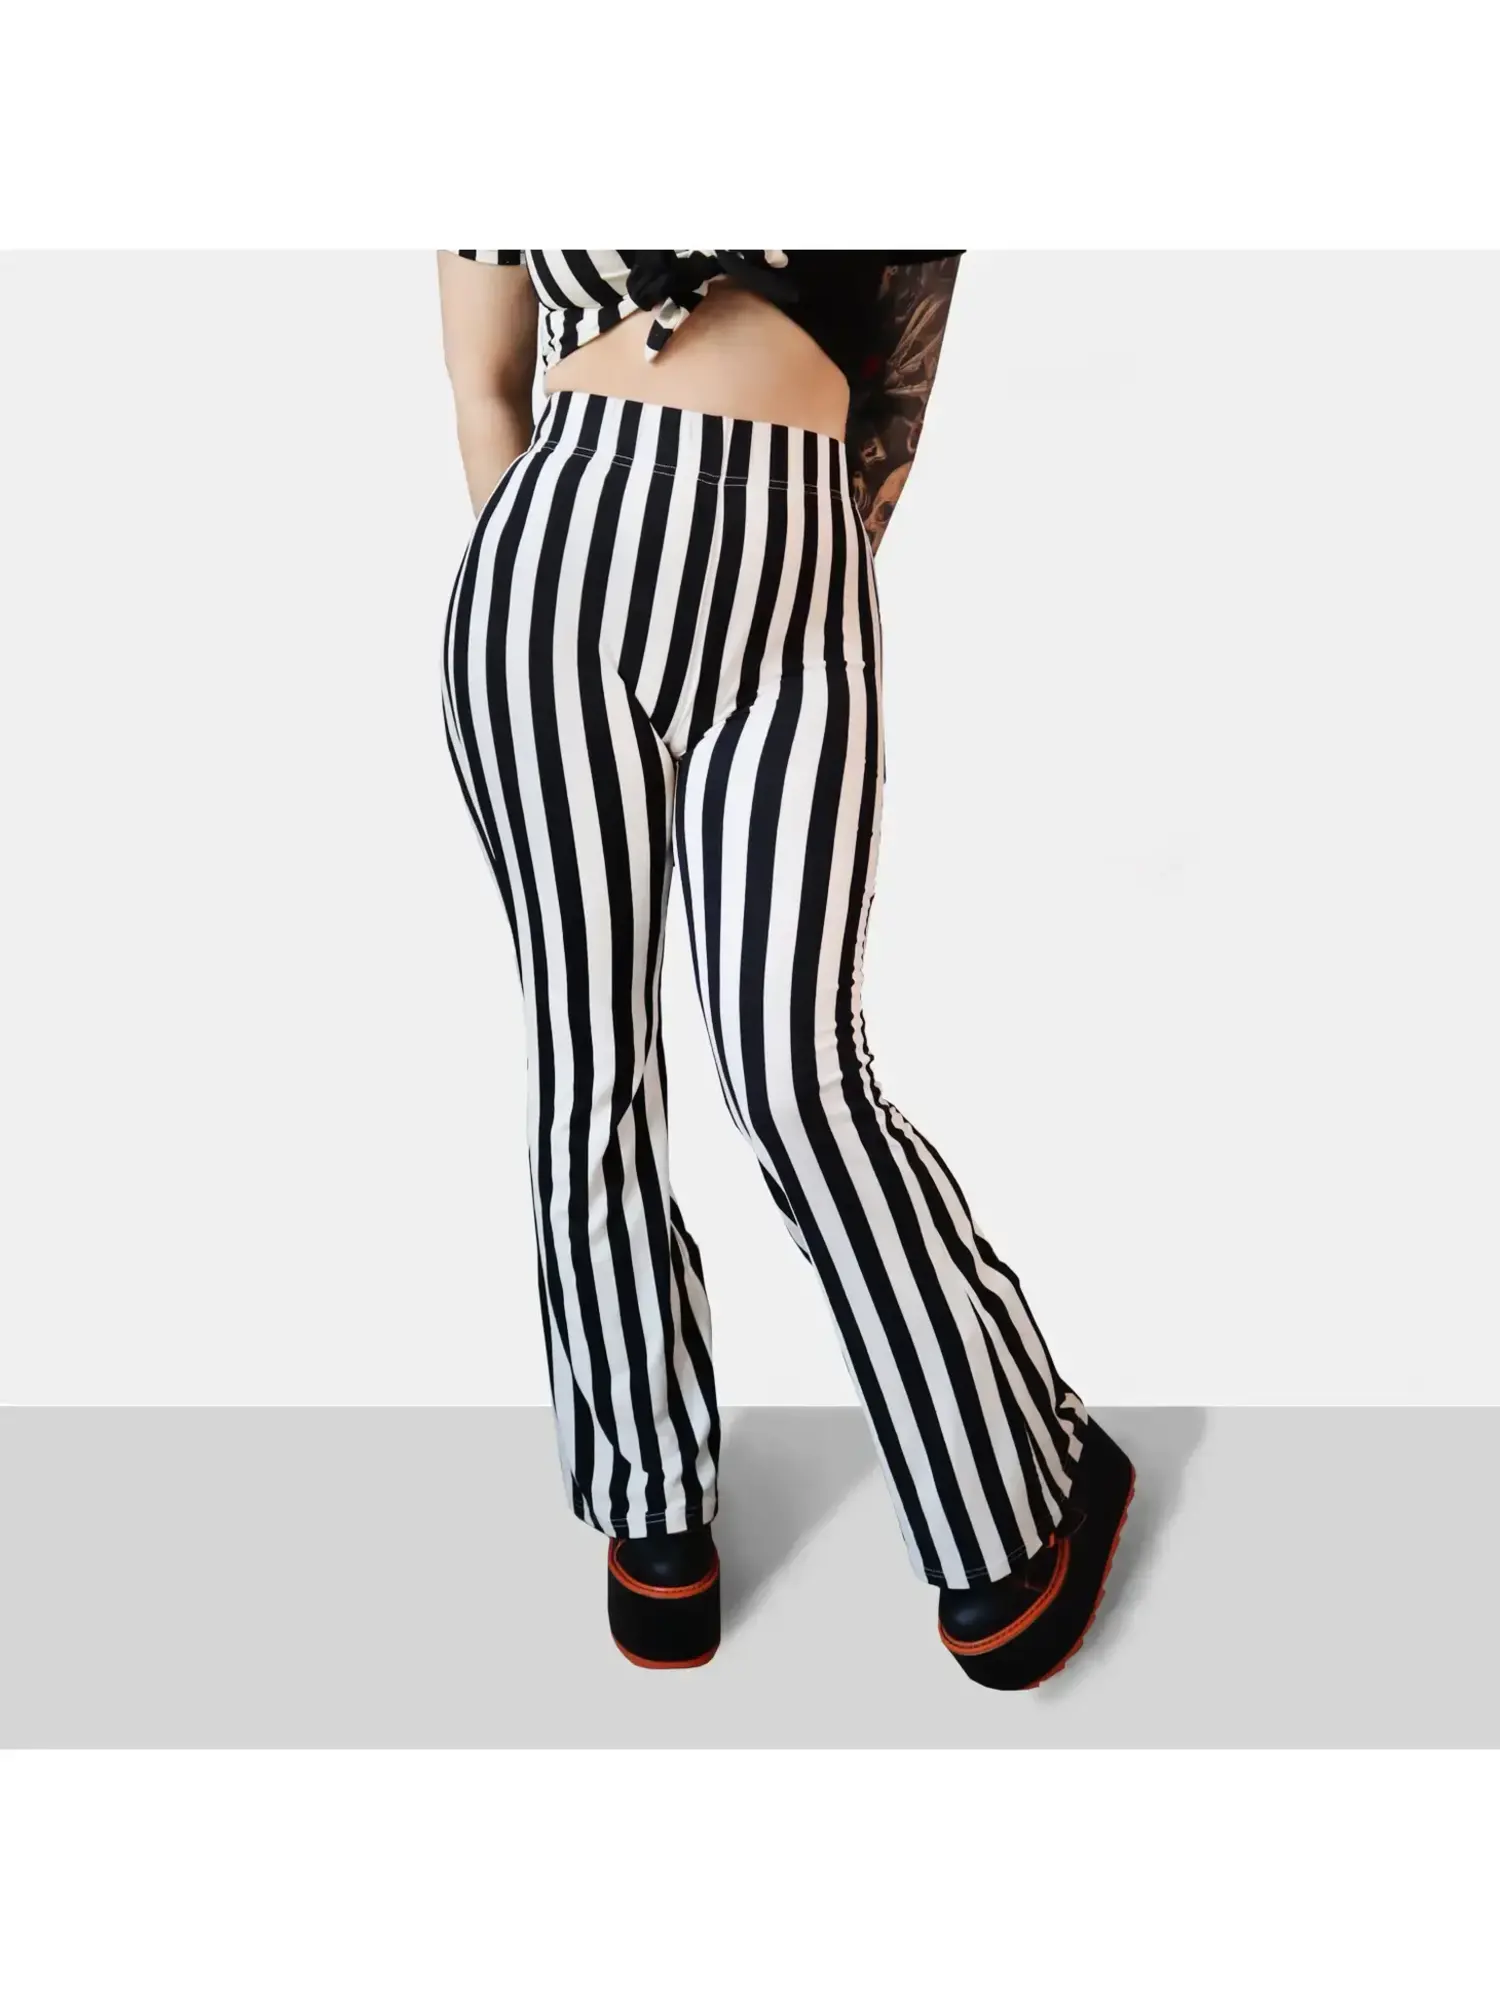 Black and White Striped Flare Pants  No Rules Fashion - No Rules Fashion